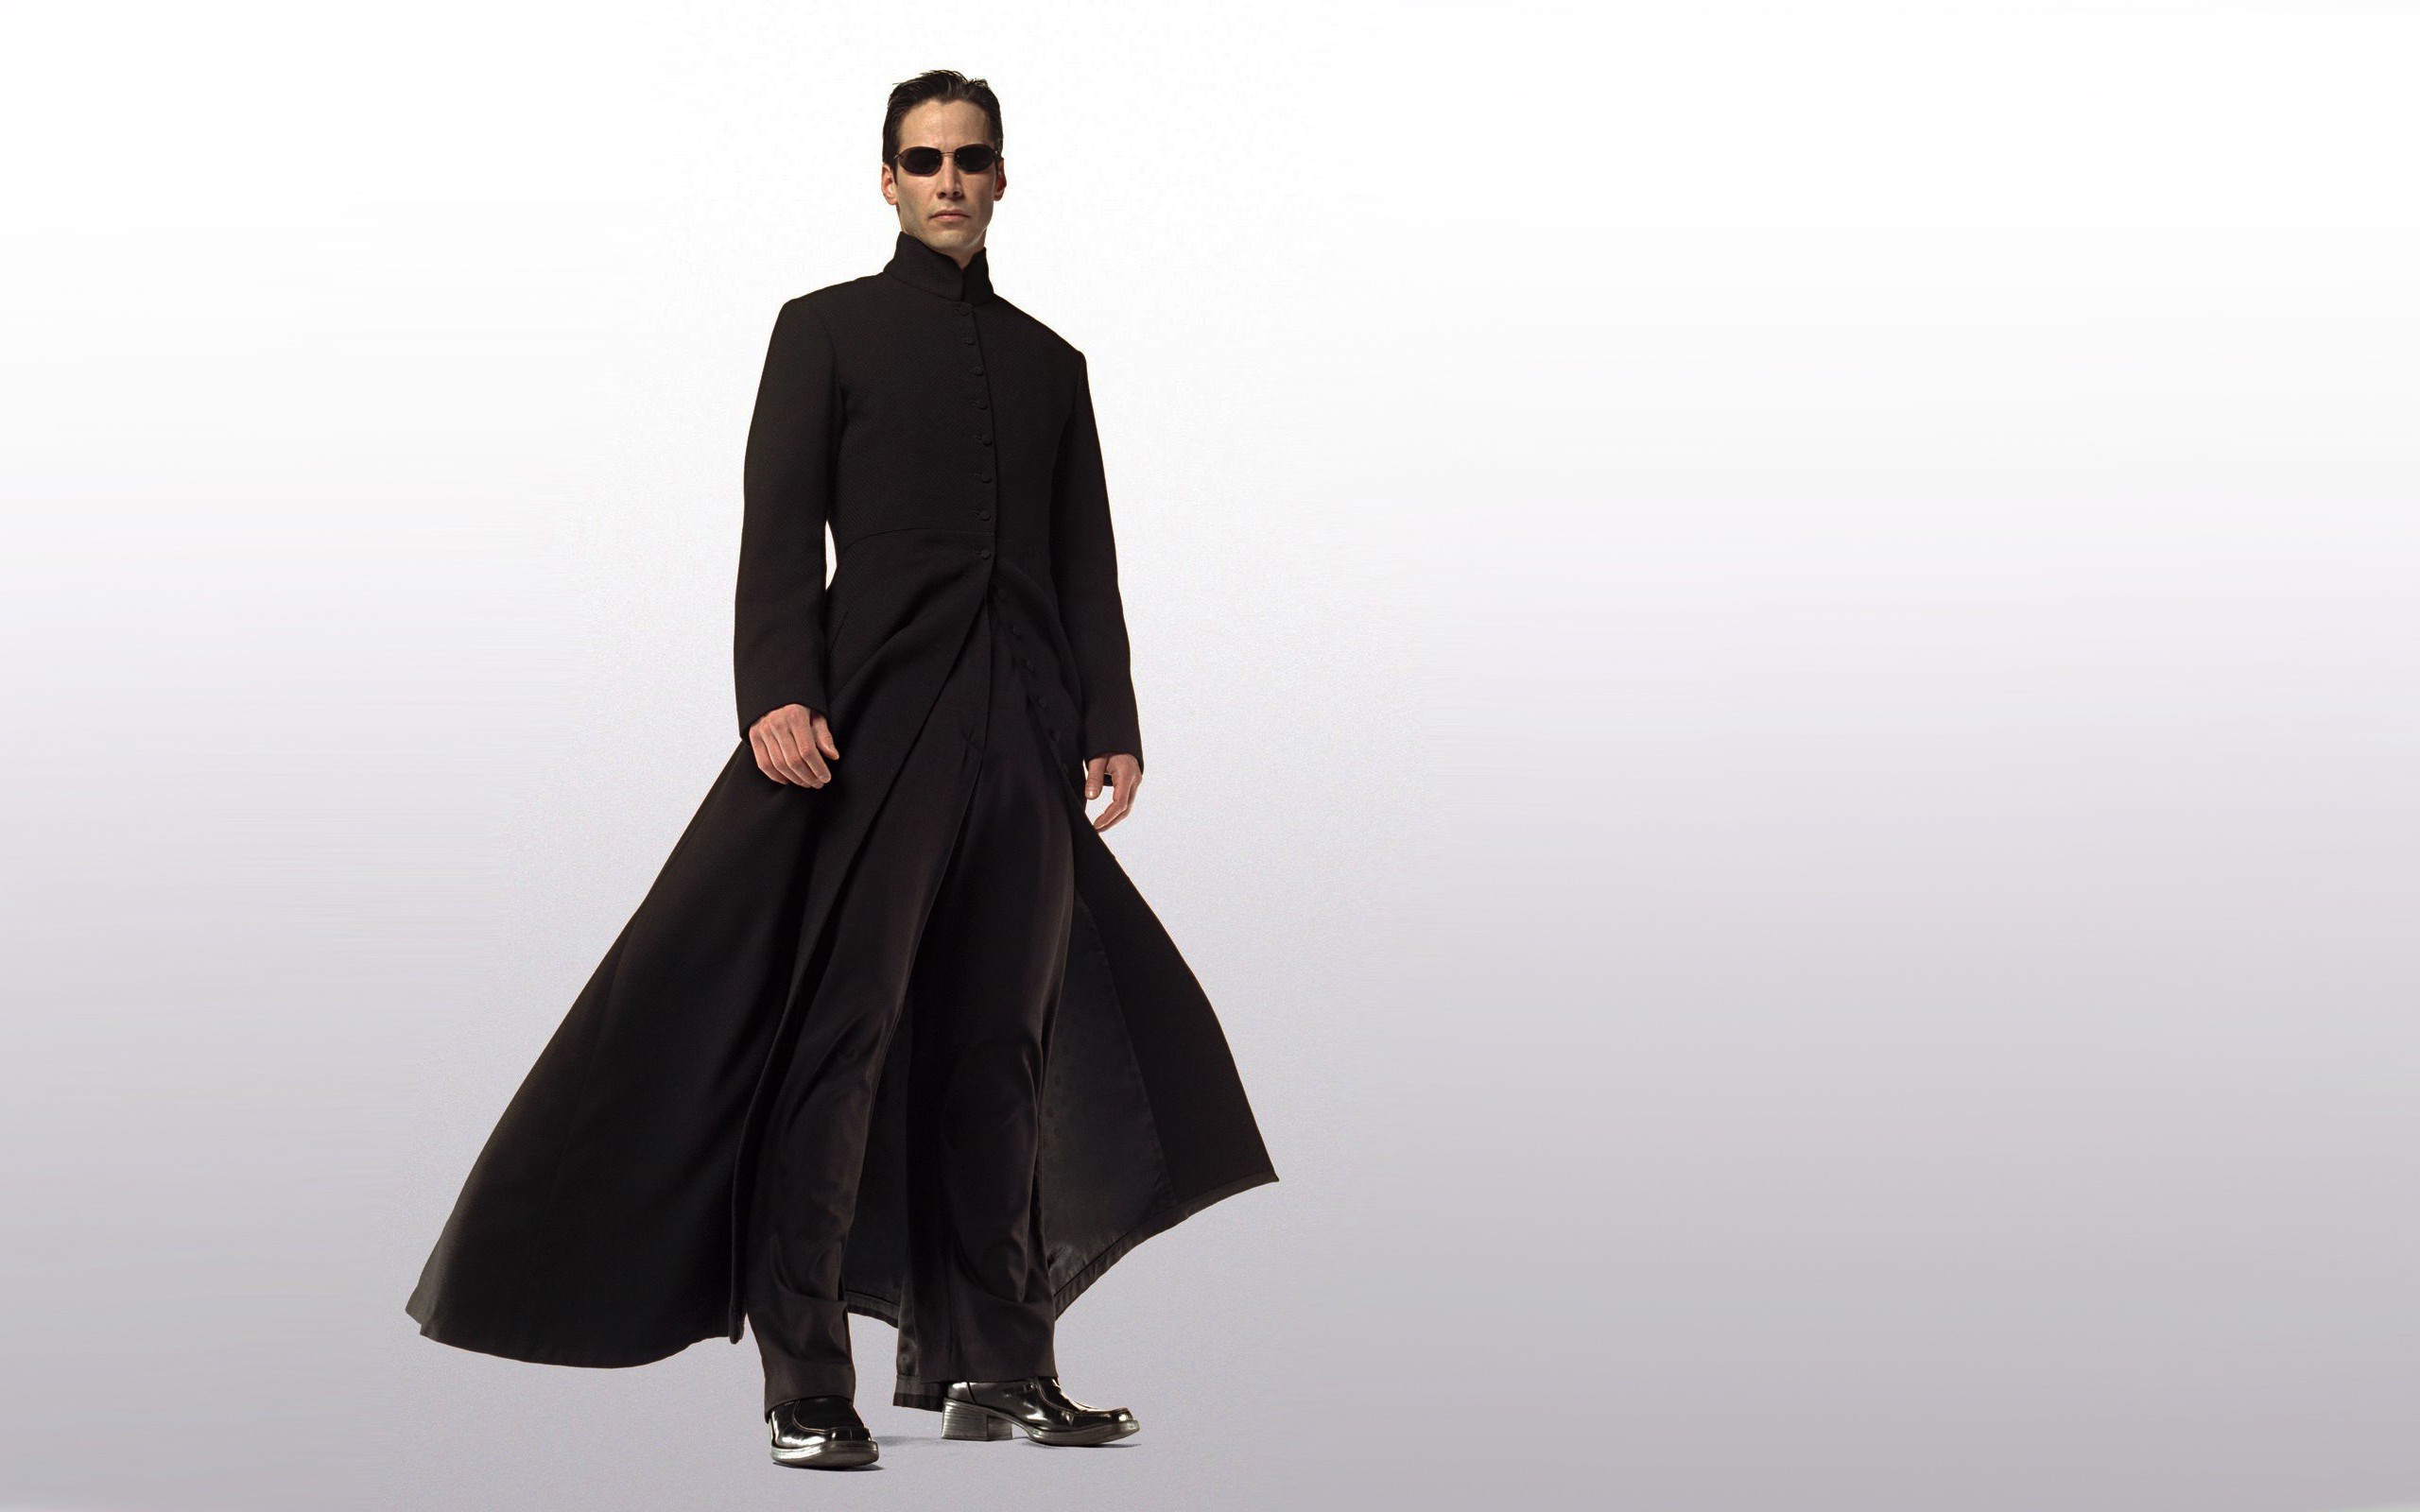 Neo, The Matrix, Keanu Reeves Wallpaper